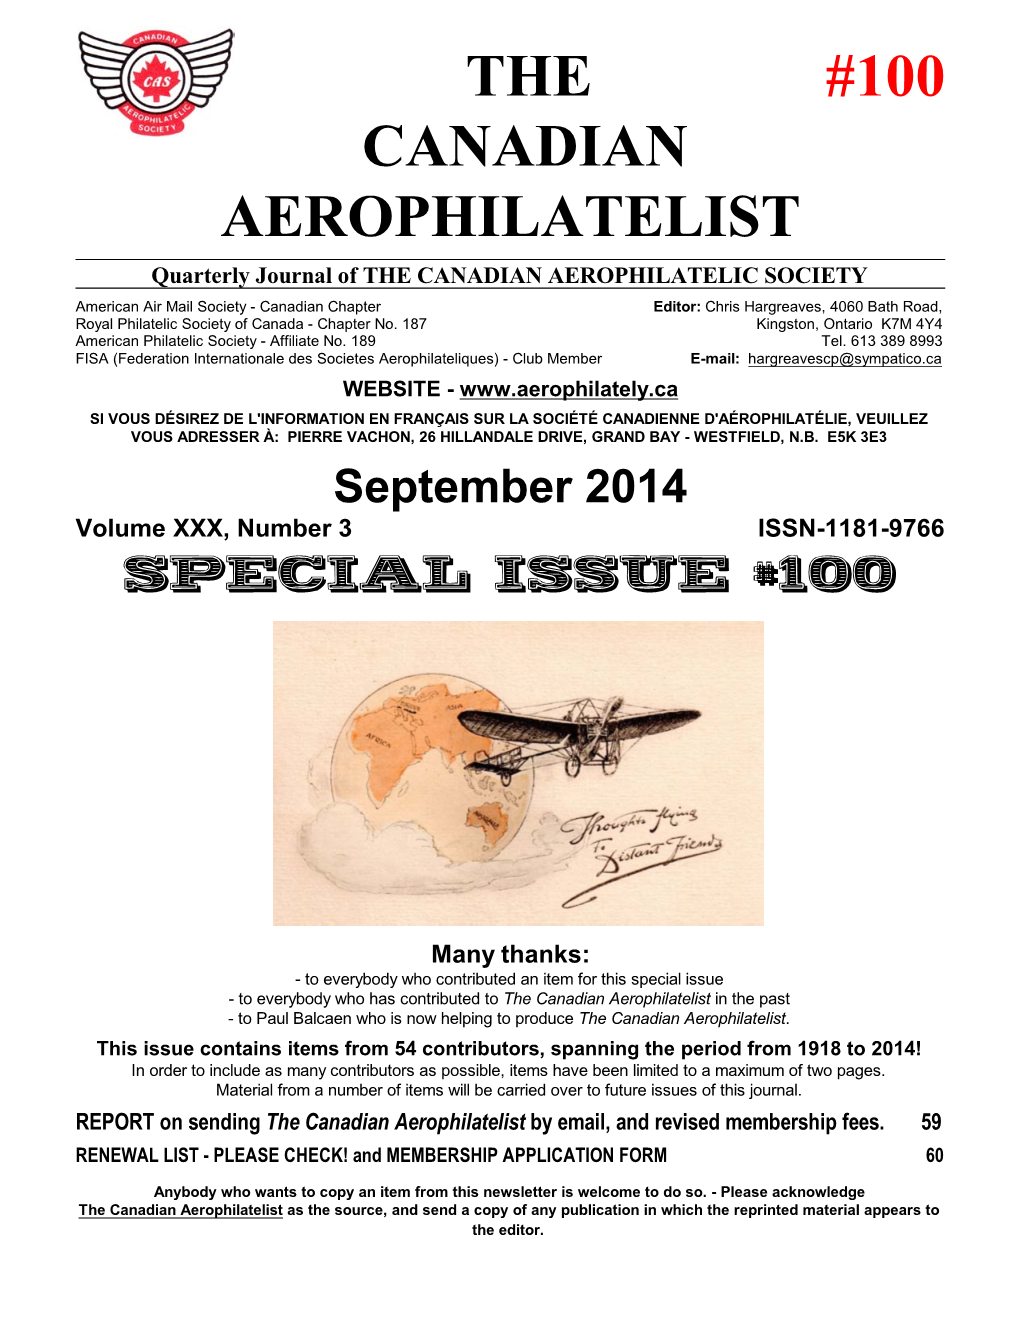 The #100 Canadian Aerophilatelist